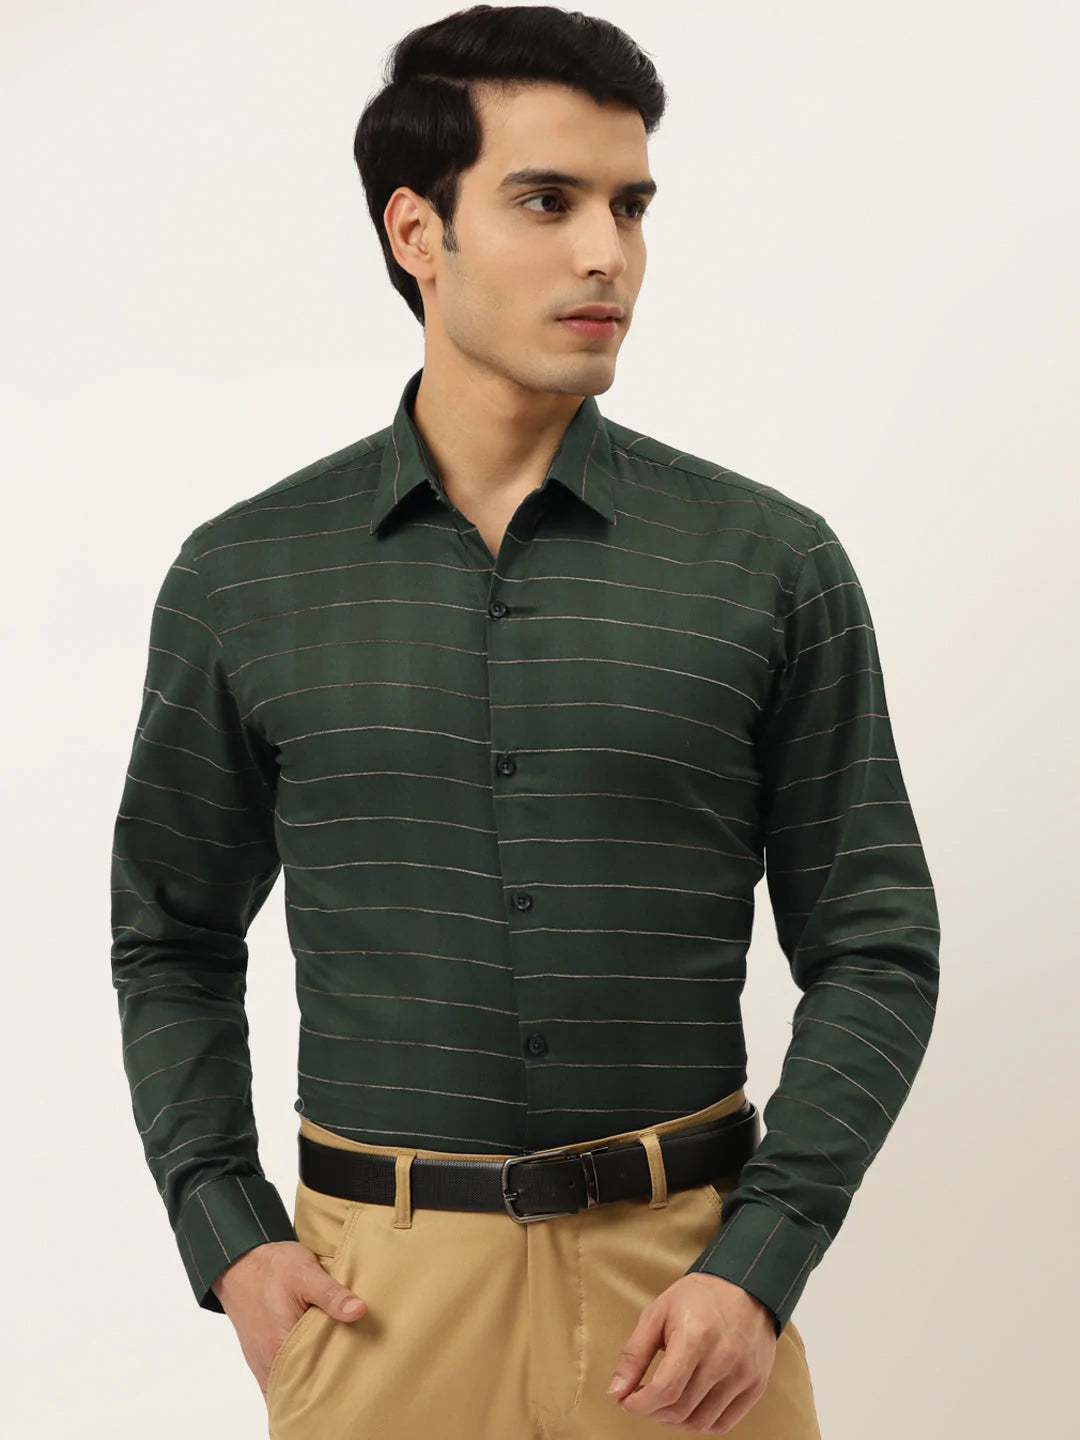 Jainish Men's Formal Cotton Horizontal Striped Shirt ( SF 790Olive )